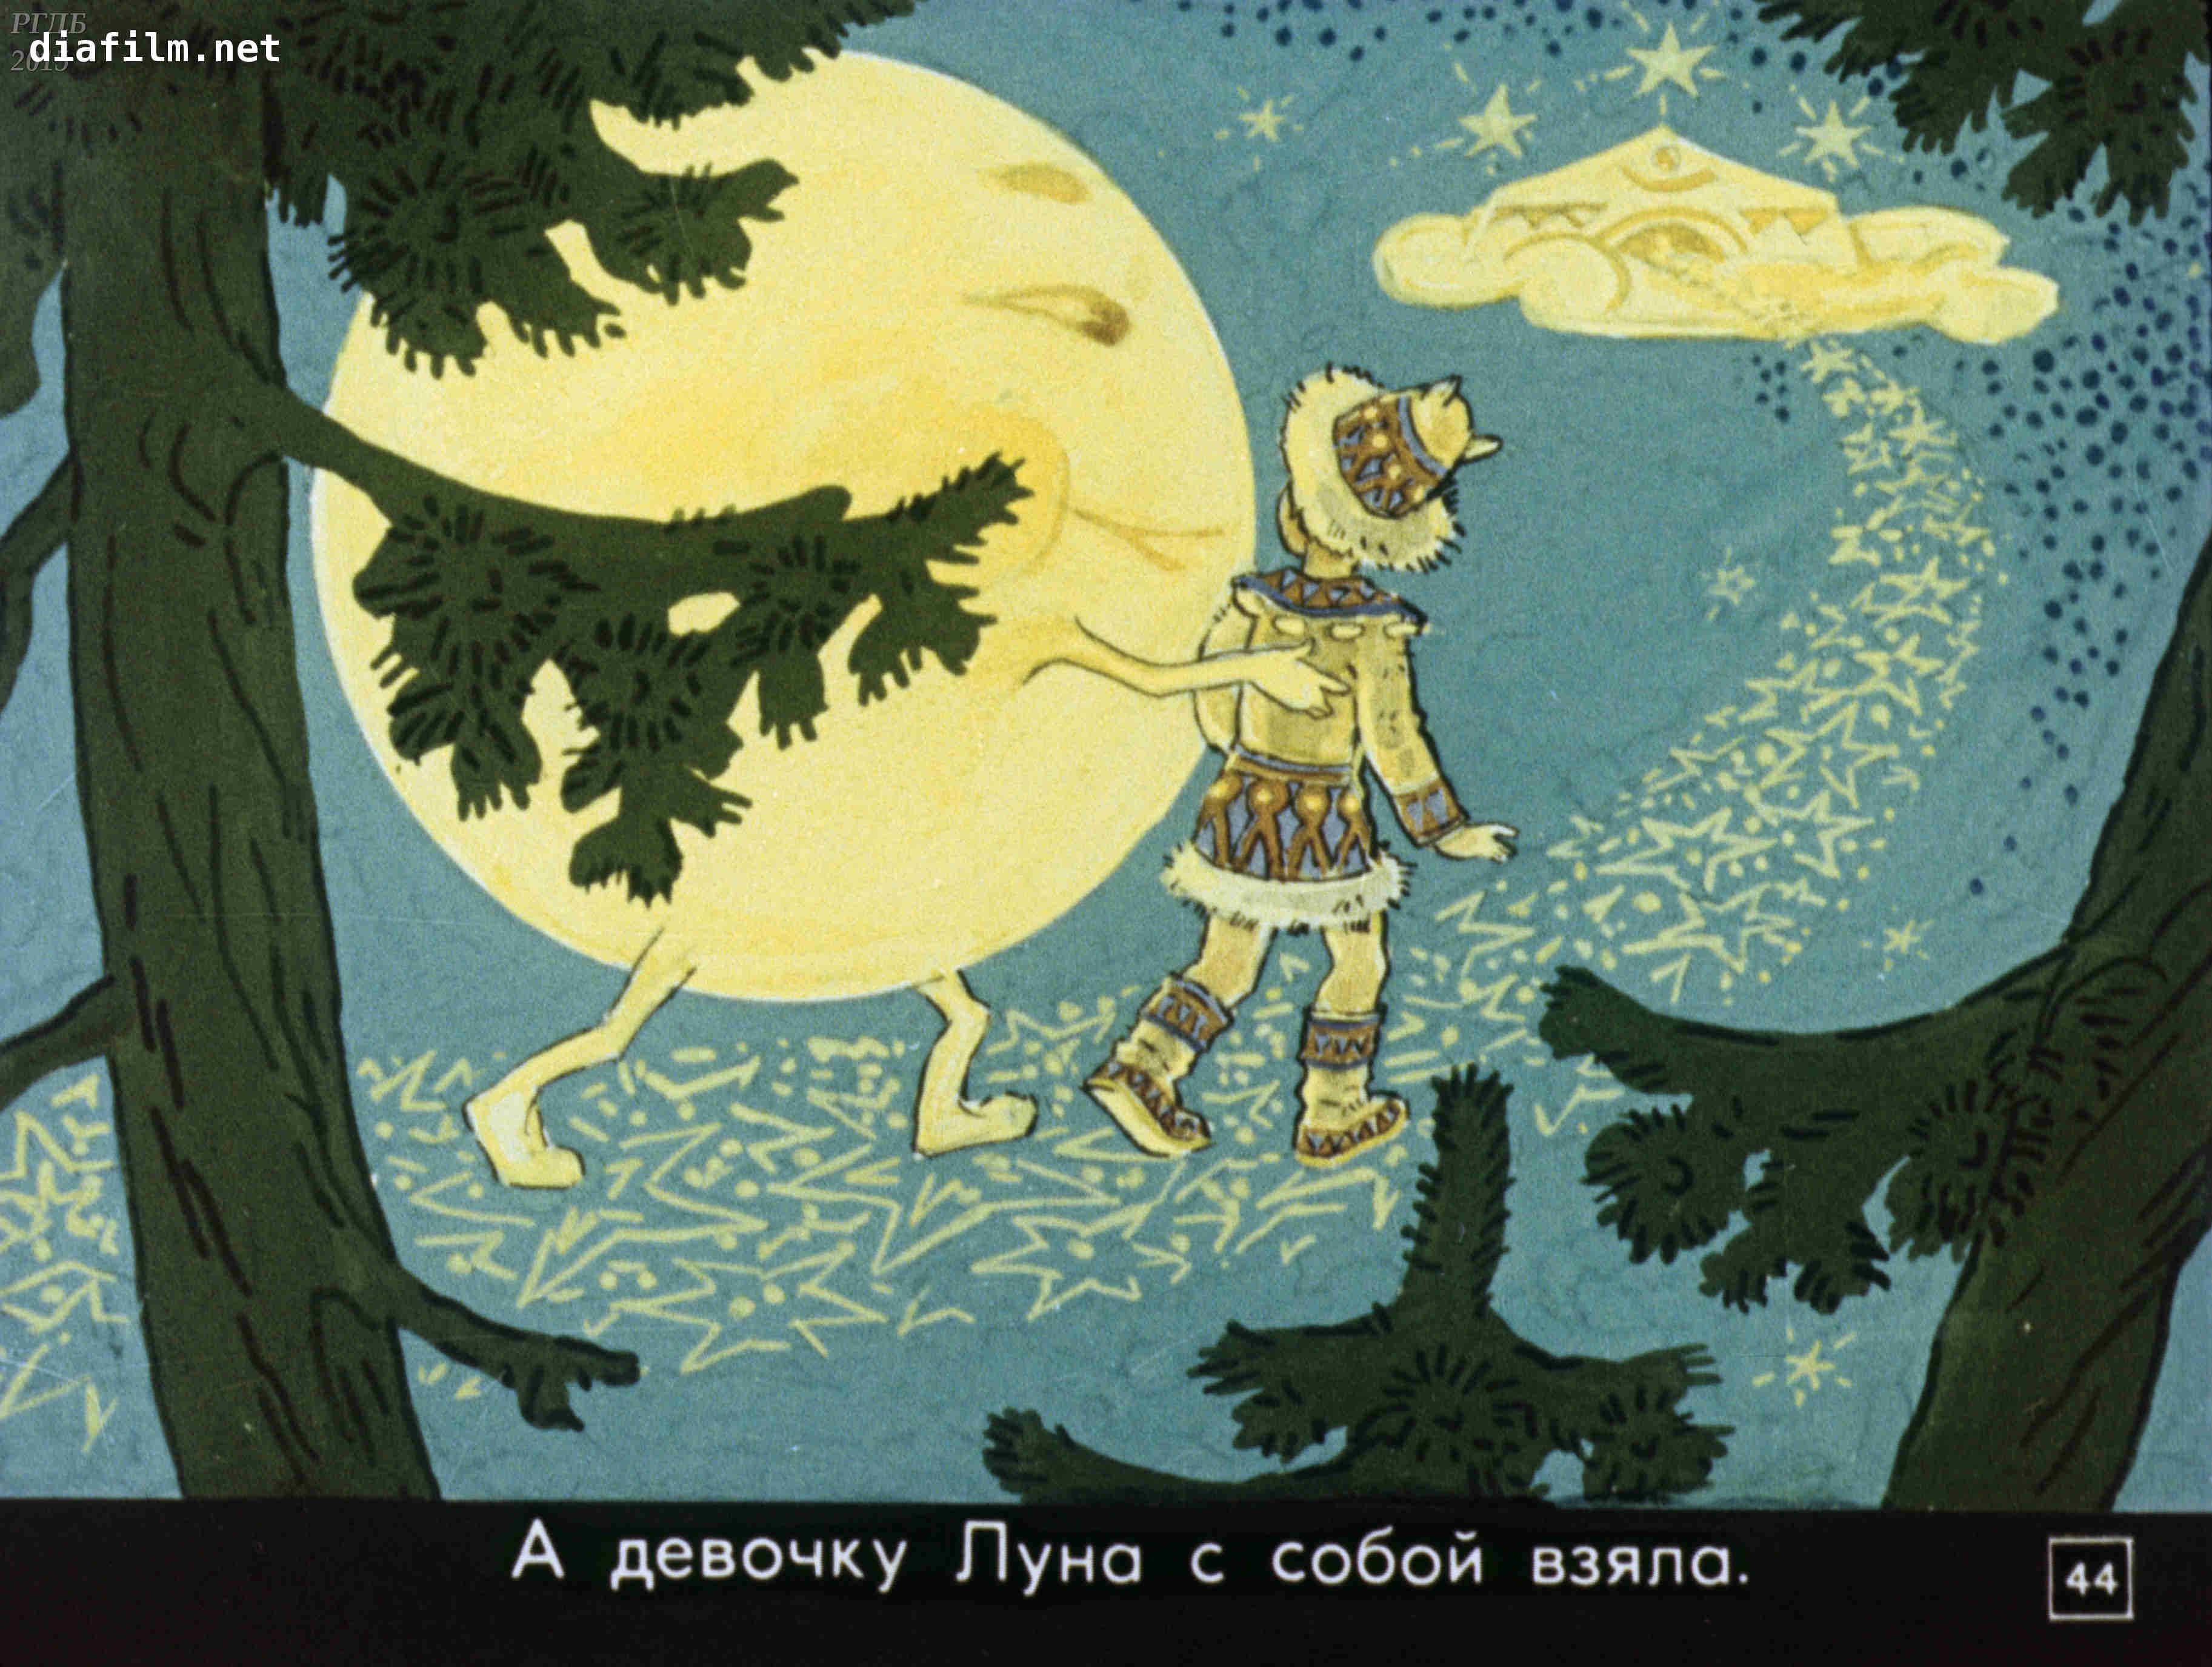 Про девочку луну. Луна сказка. Детские сказки про луну. Девушка и Луна сказка. Сказочная Луна.